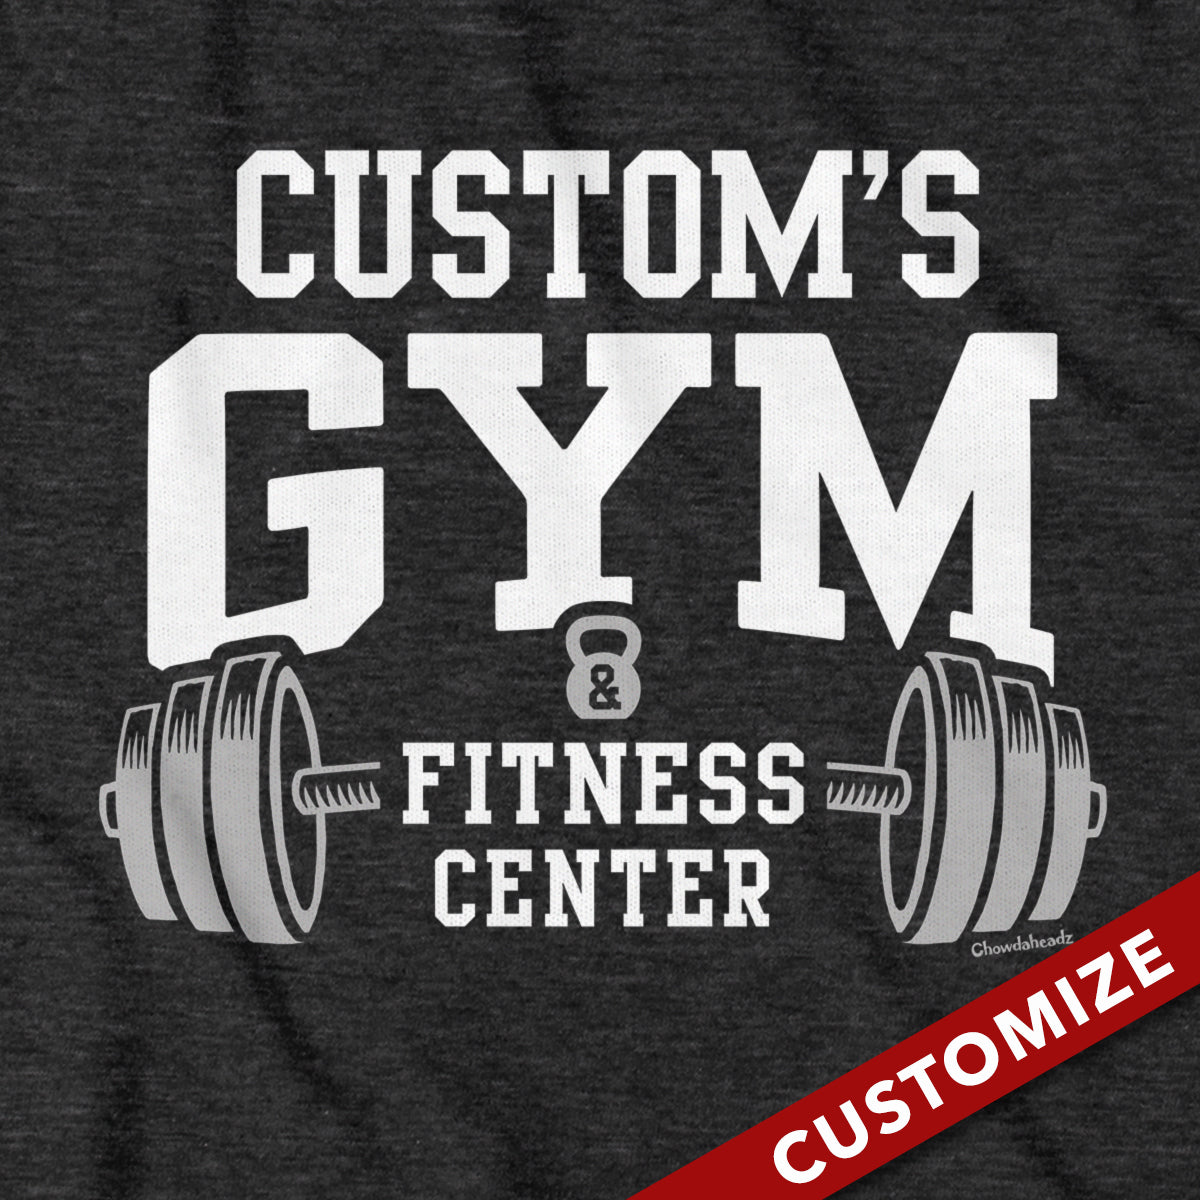 Custom Name's Gym T-Shirt - Chowdaheadz